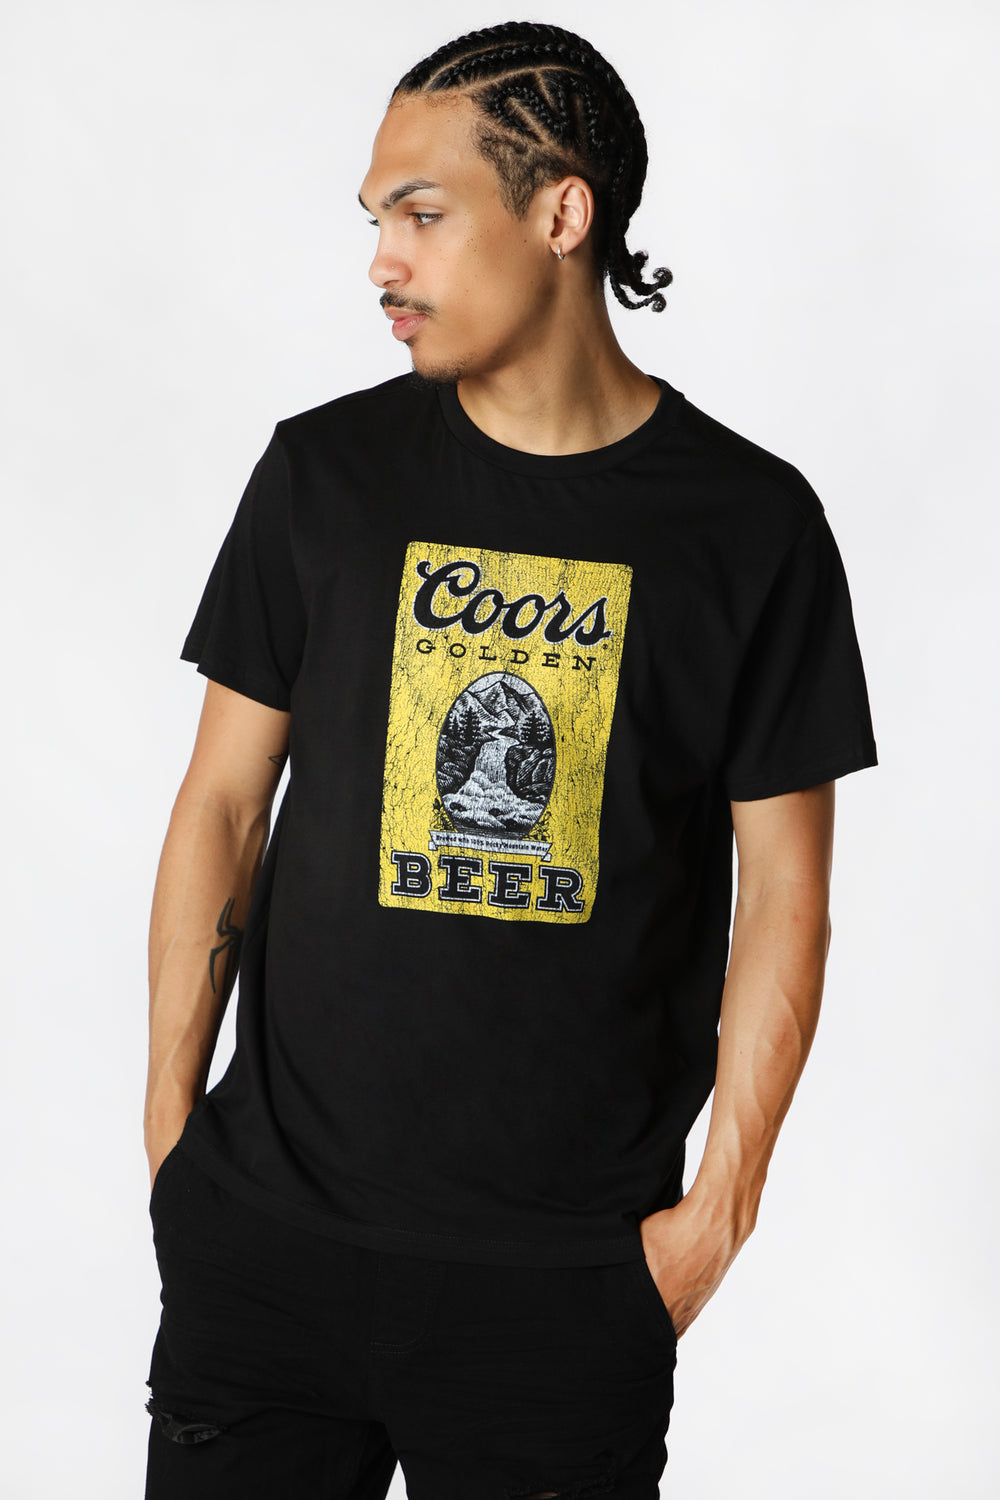 Mens Coors Golden Beer T-Shirt Black